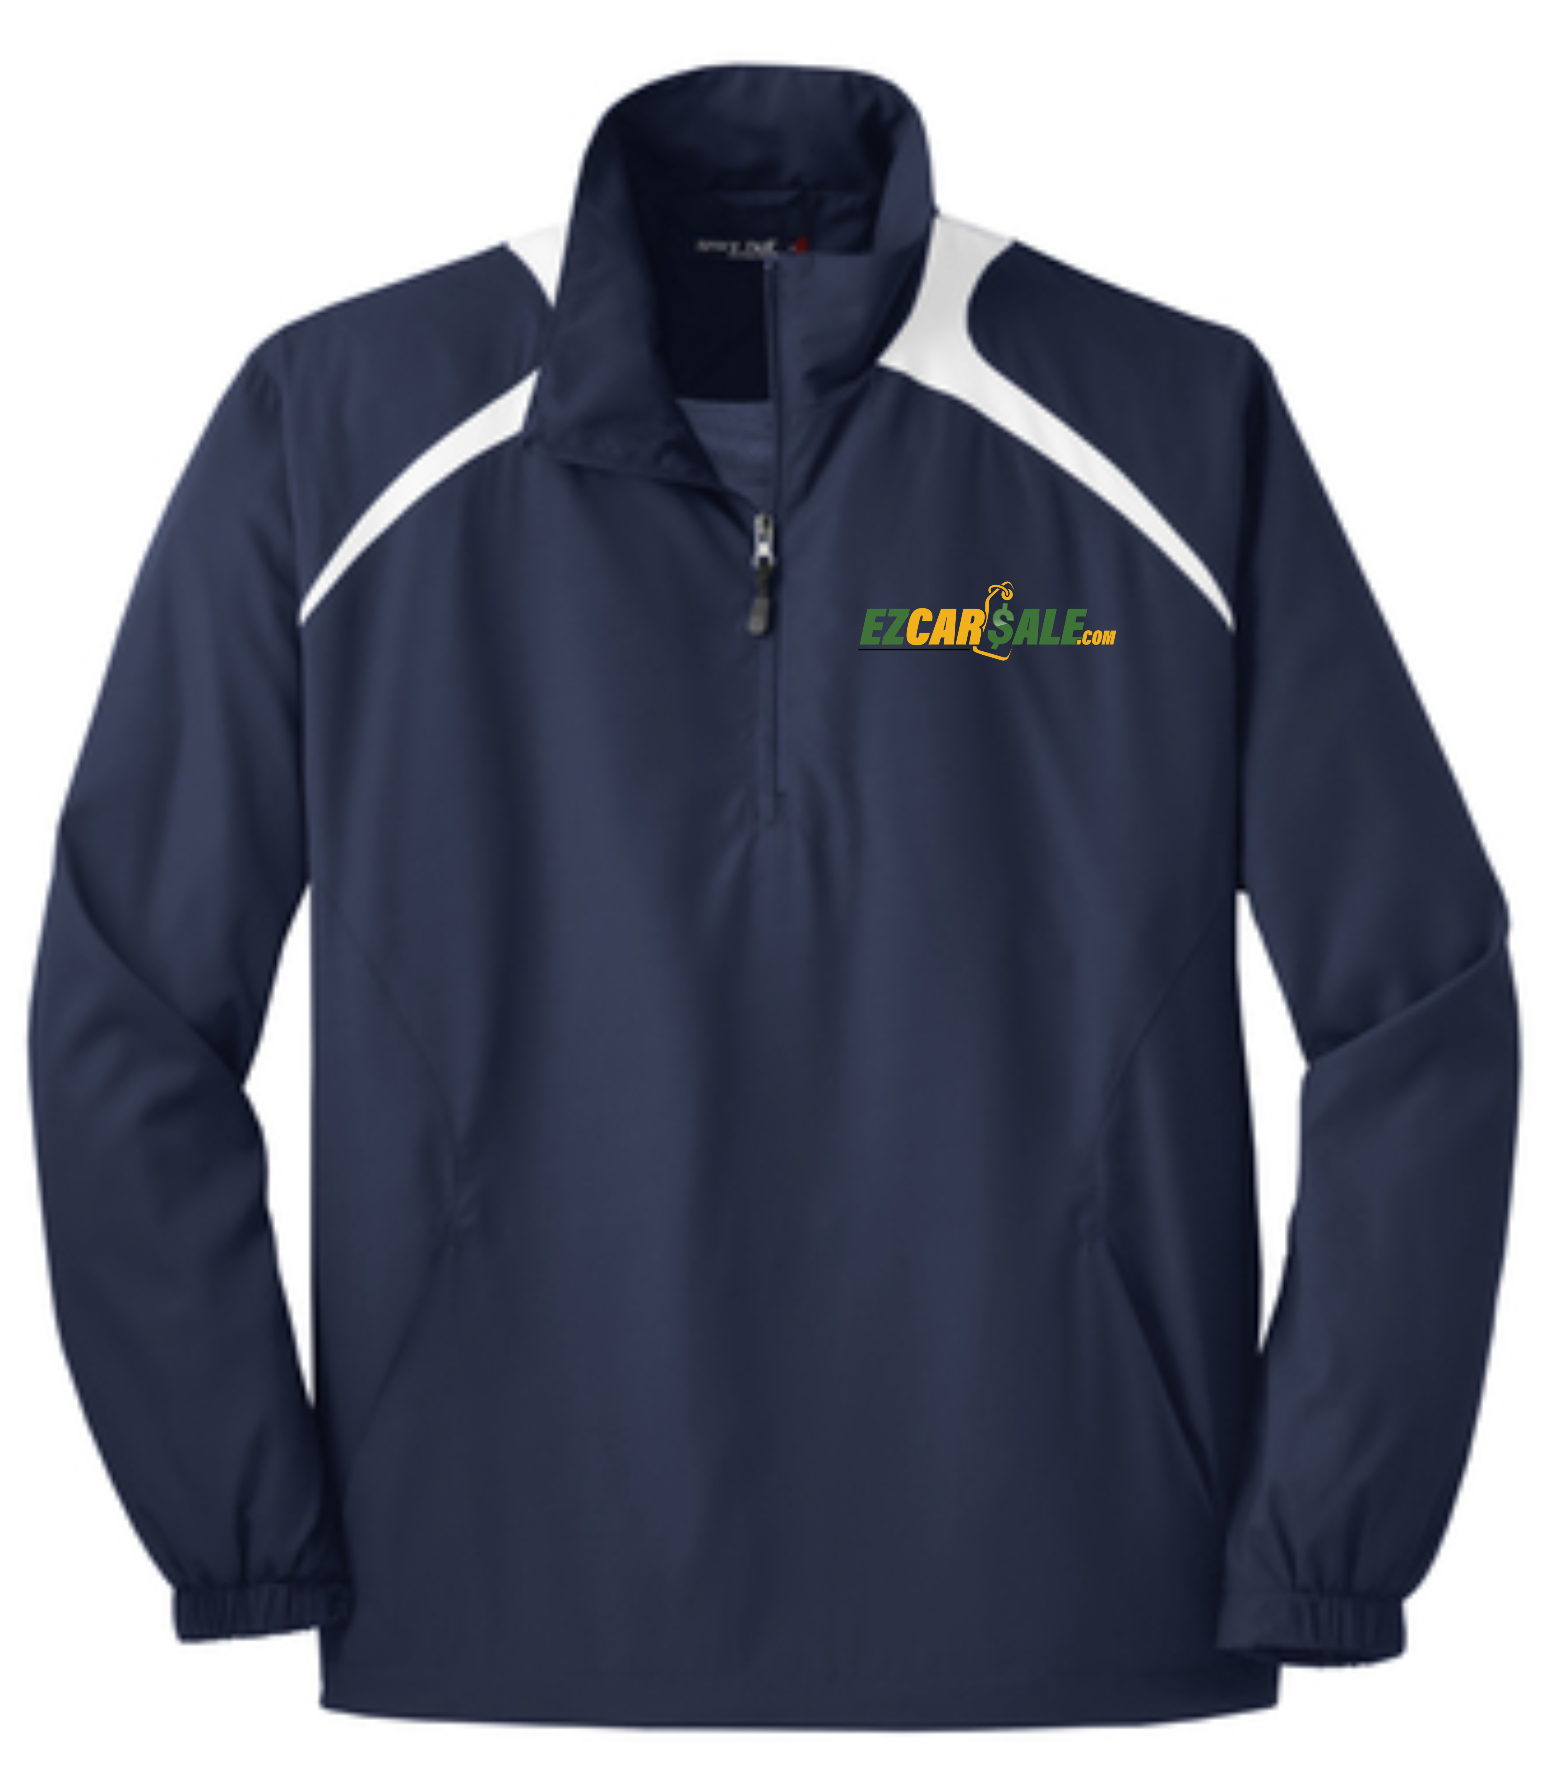 EZCAR$ALE - Sport-Tek® 1/2-Zip Wind Shirt - JST75